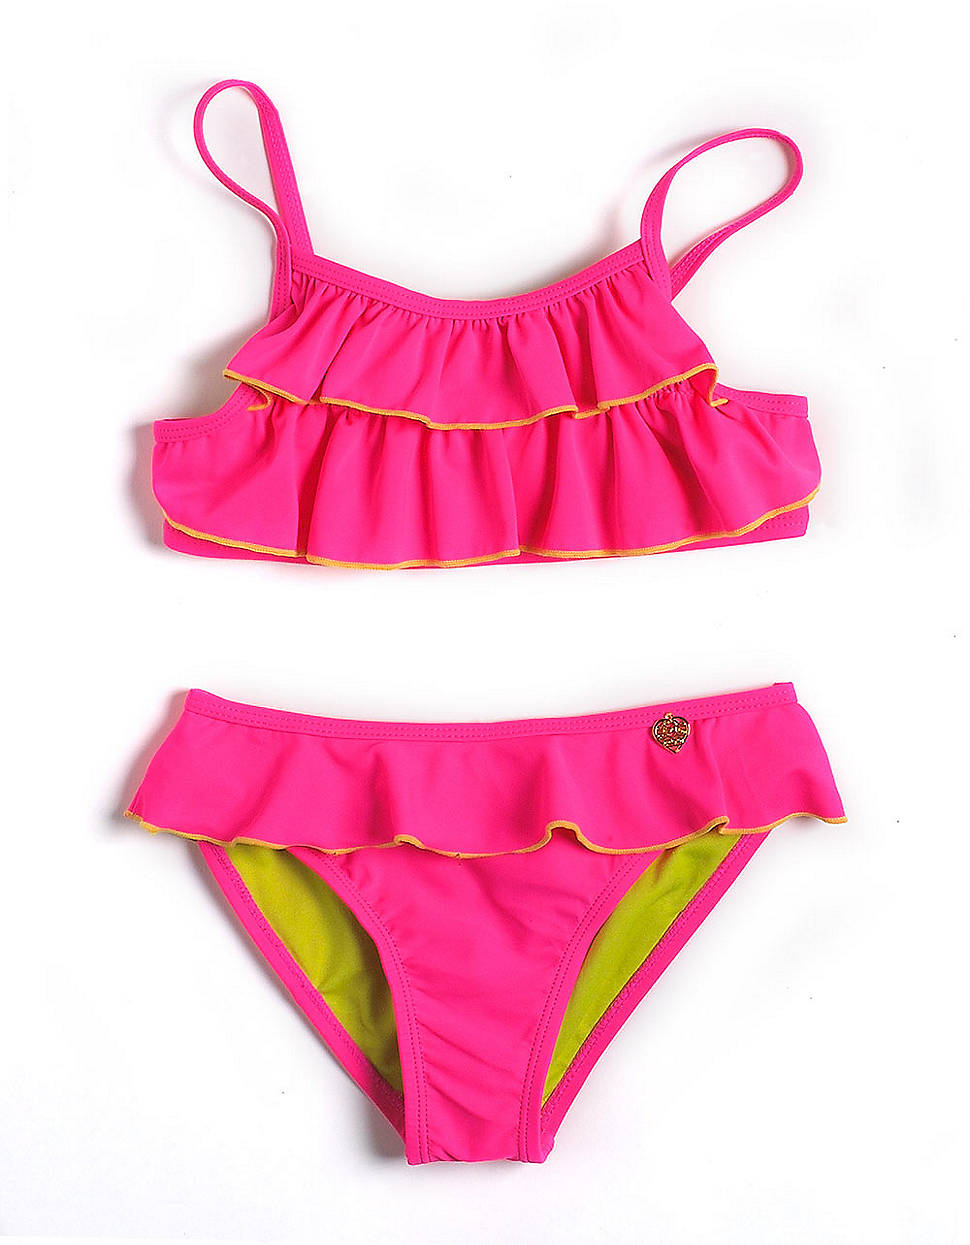 Lyst - Jessica simpson Tweens Bikini Swimsuit in Pink